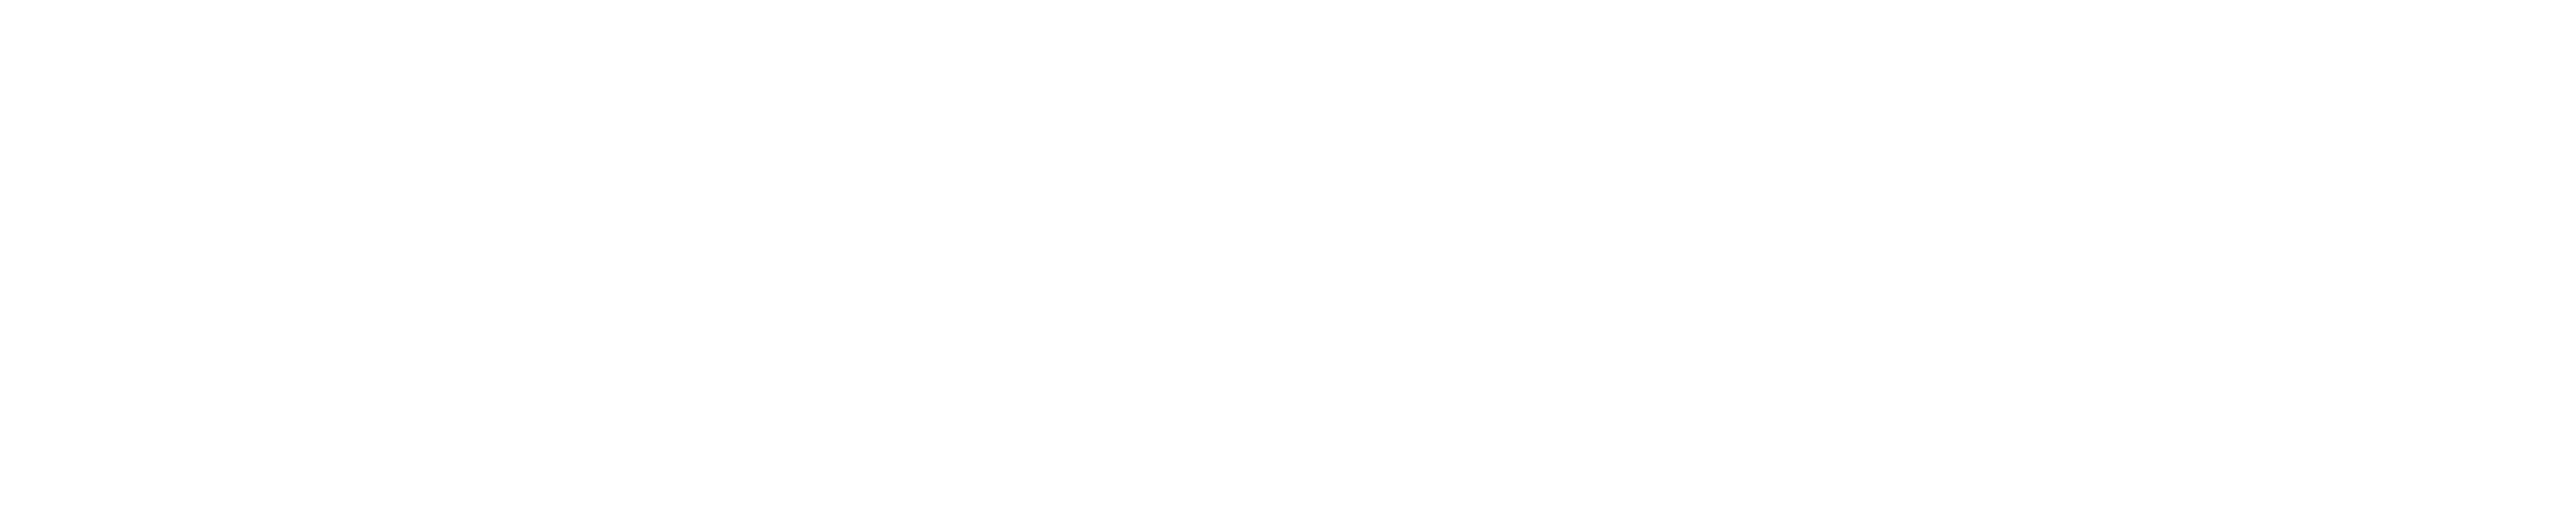 Dongguan Seanda Metal Products Co. Ltd.